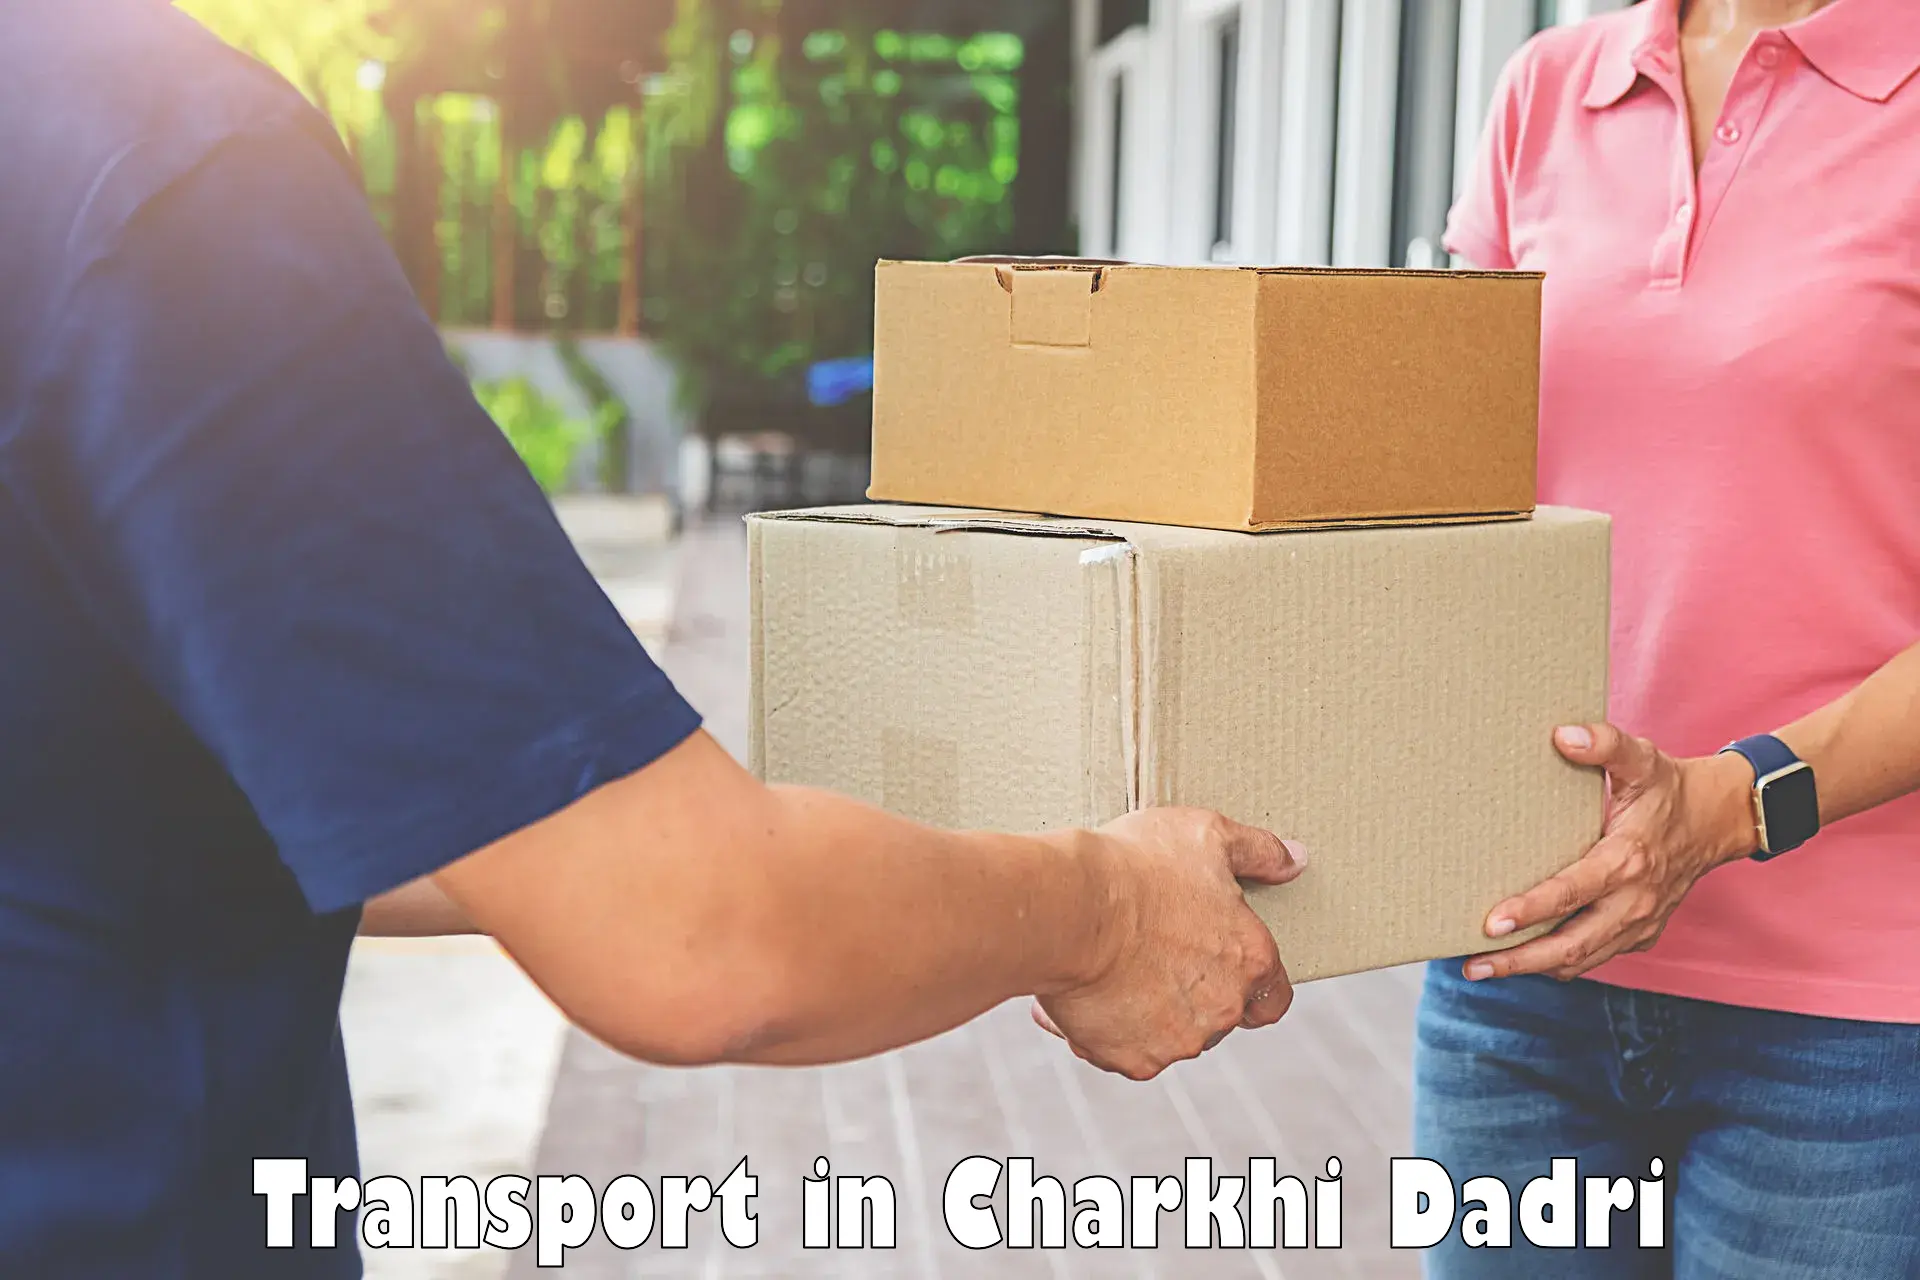 Transportation services in Charkhi Dadri